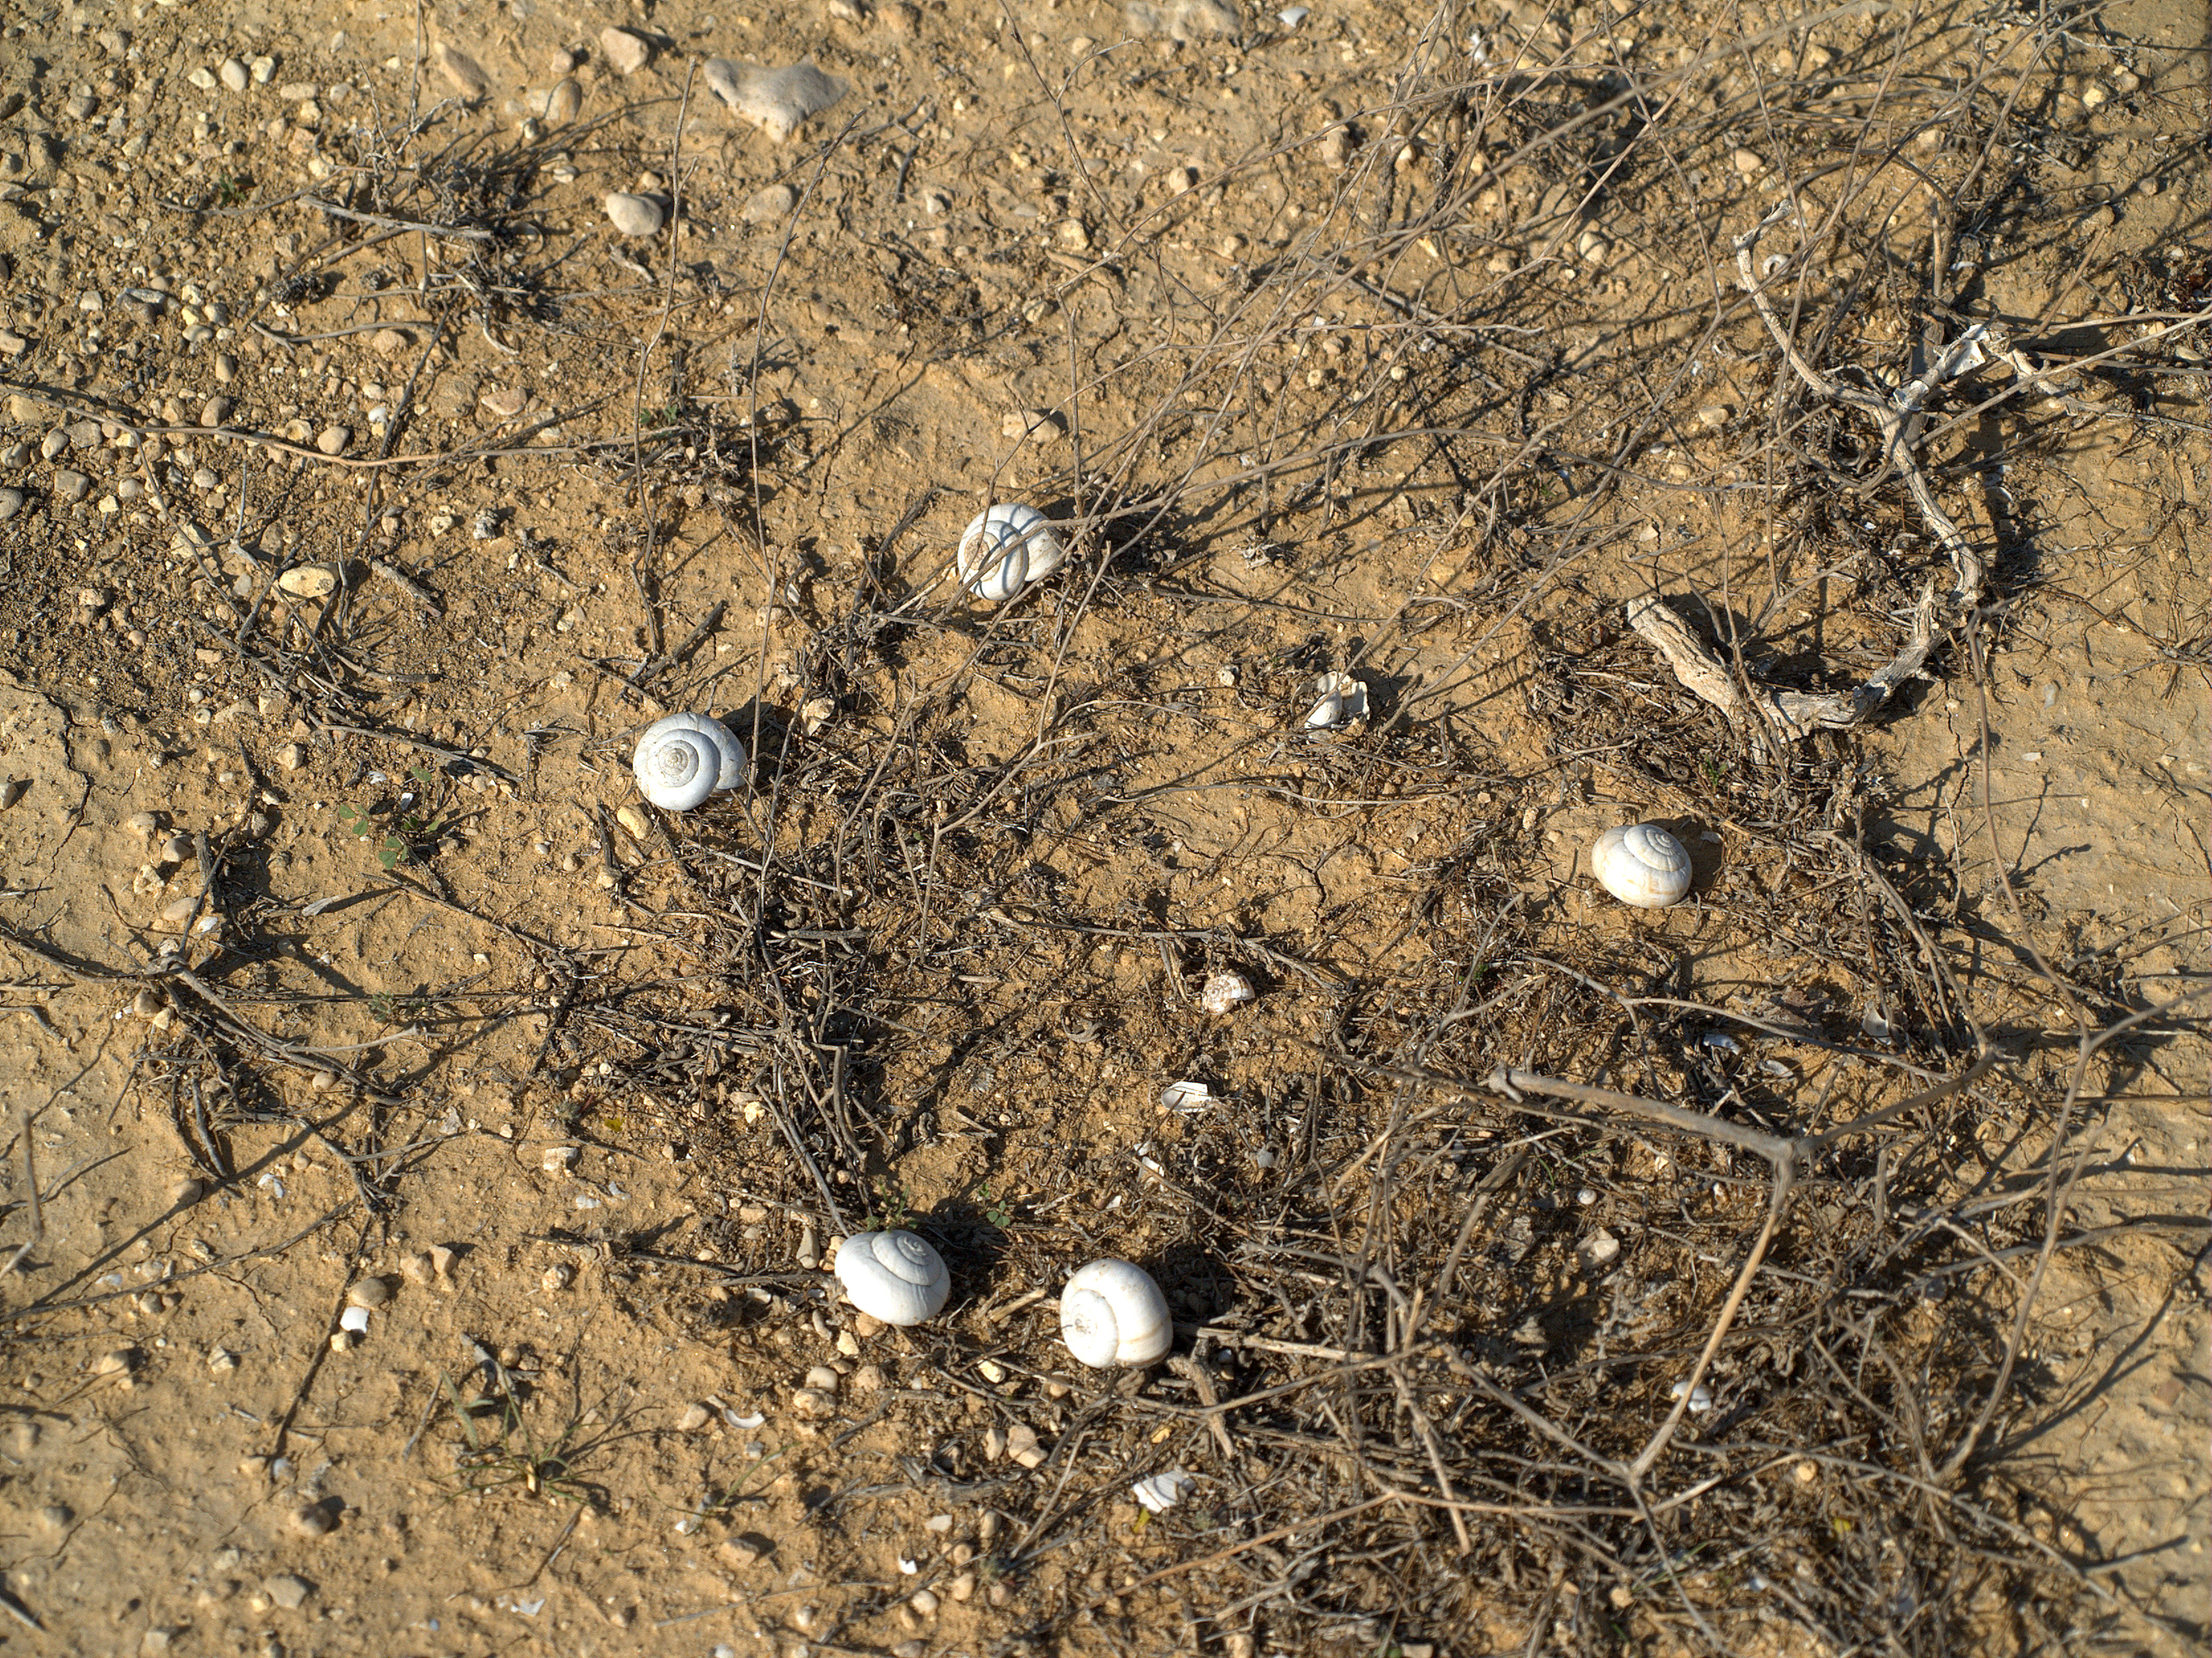 File:Seashells on the ground of the Negev desert.jpg - Wikimedia Commons